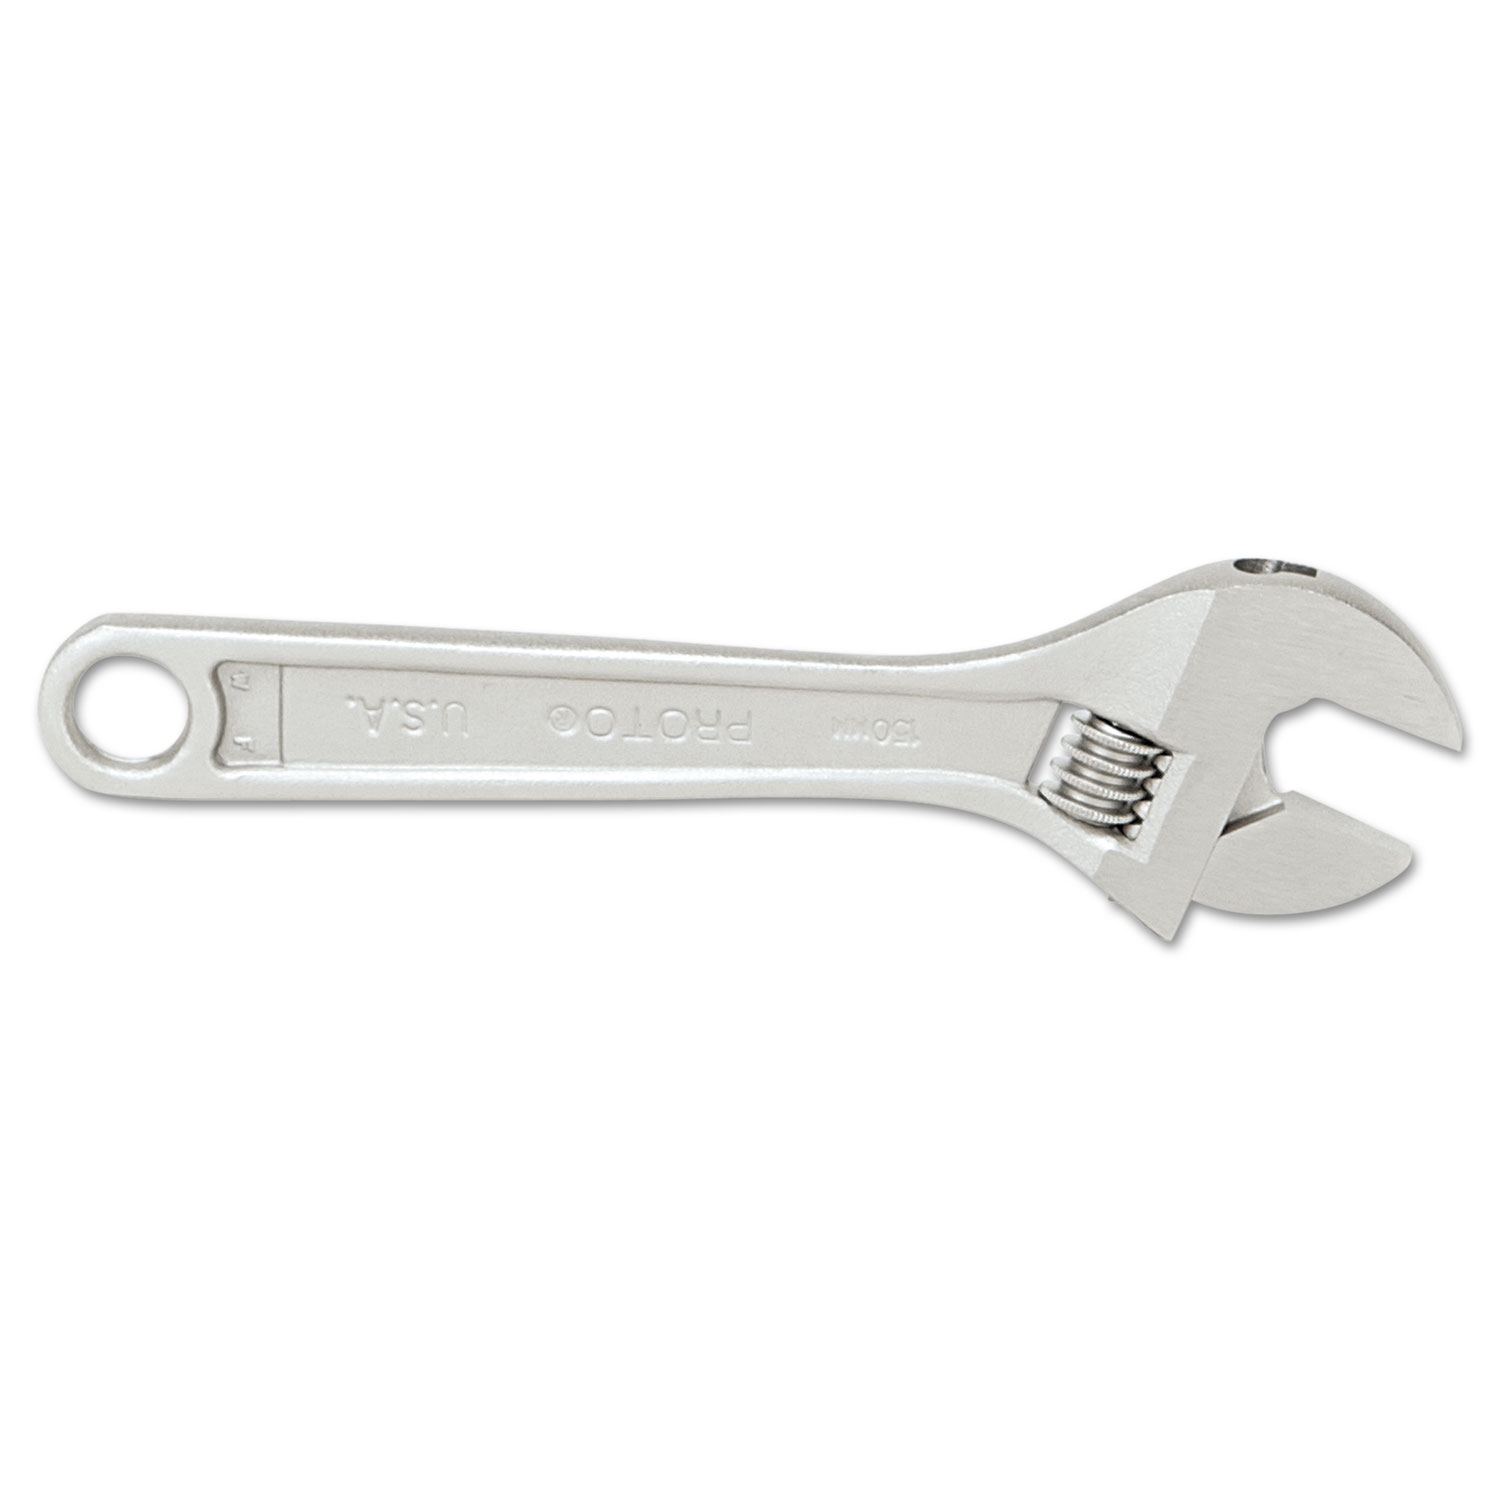 PROTO Adjustable Wrench, 6 Long, 15/16 Opening, Satin Chrome